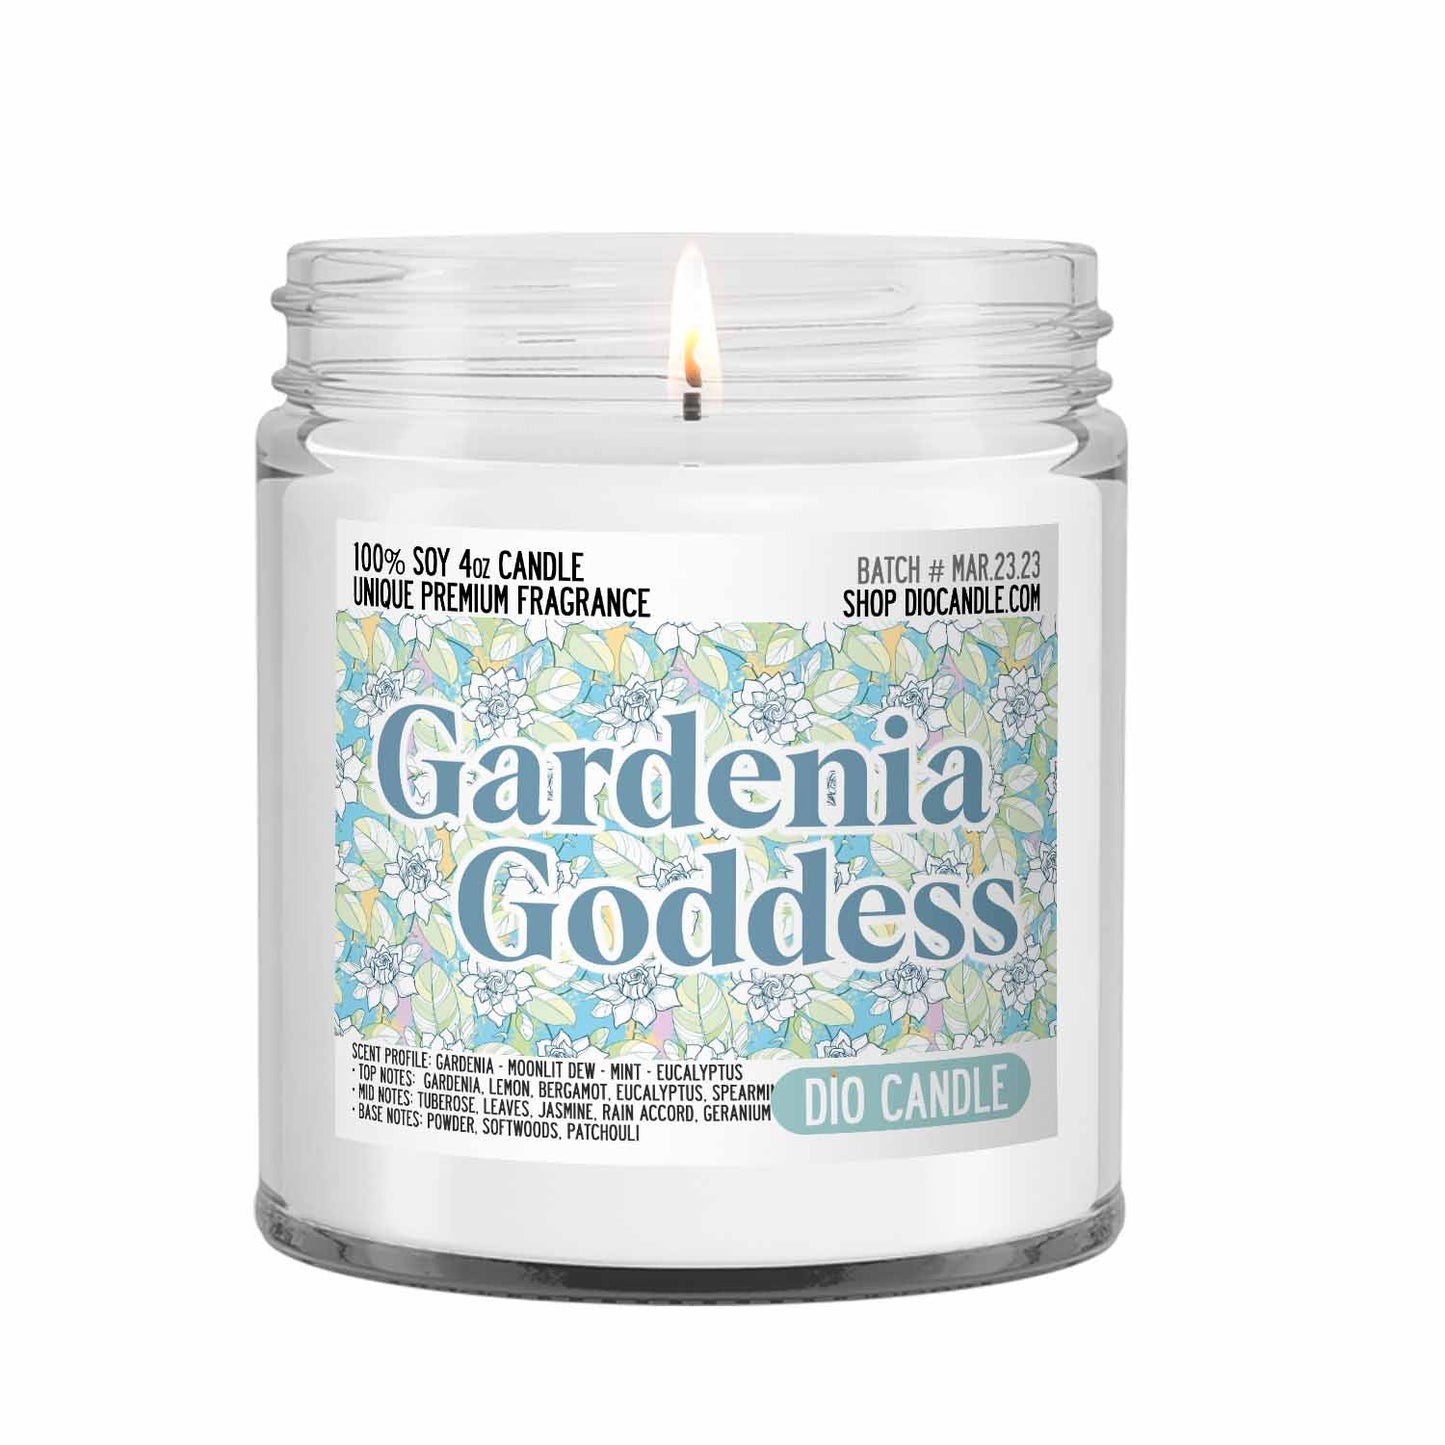 Gardenia Goddess Candle